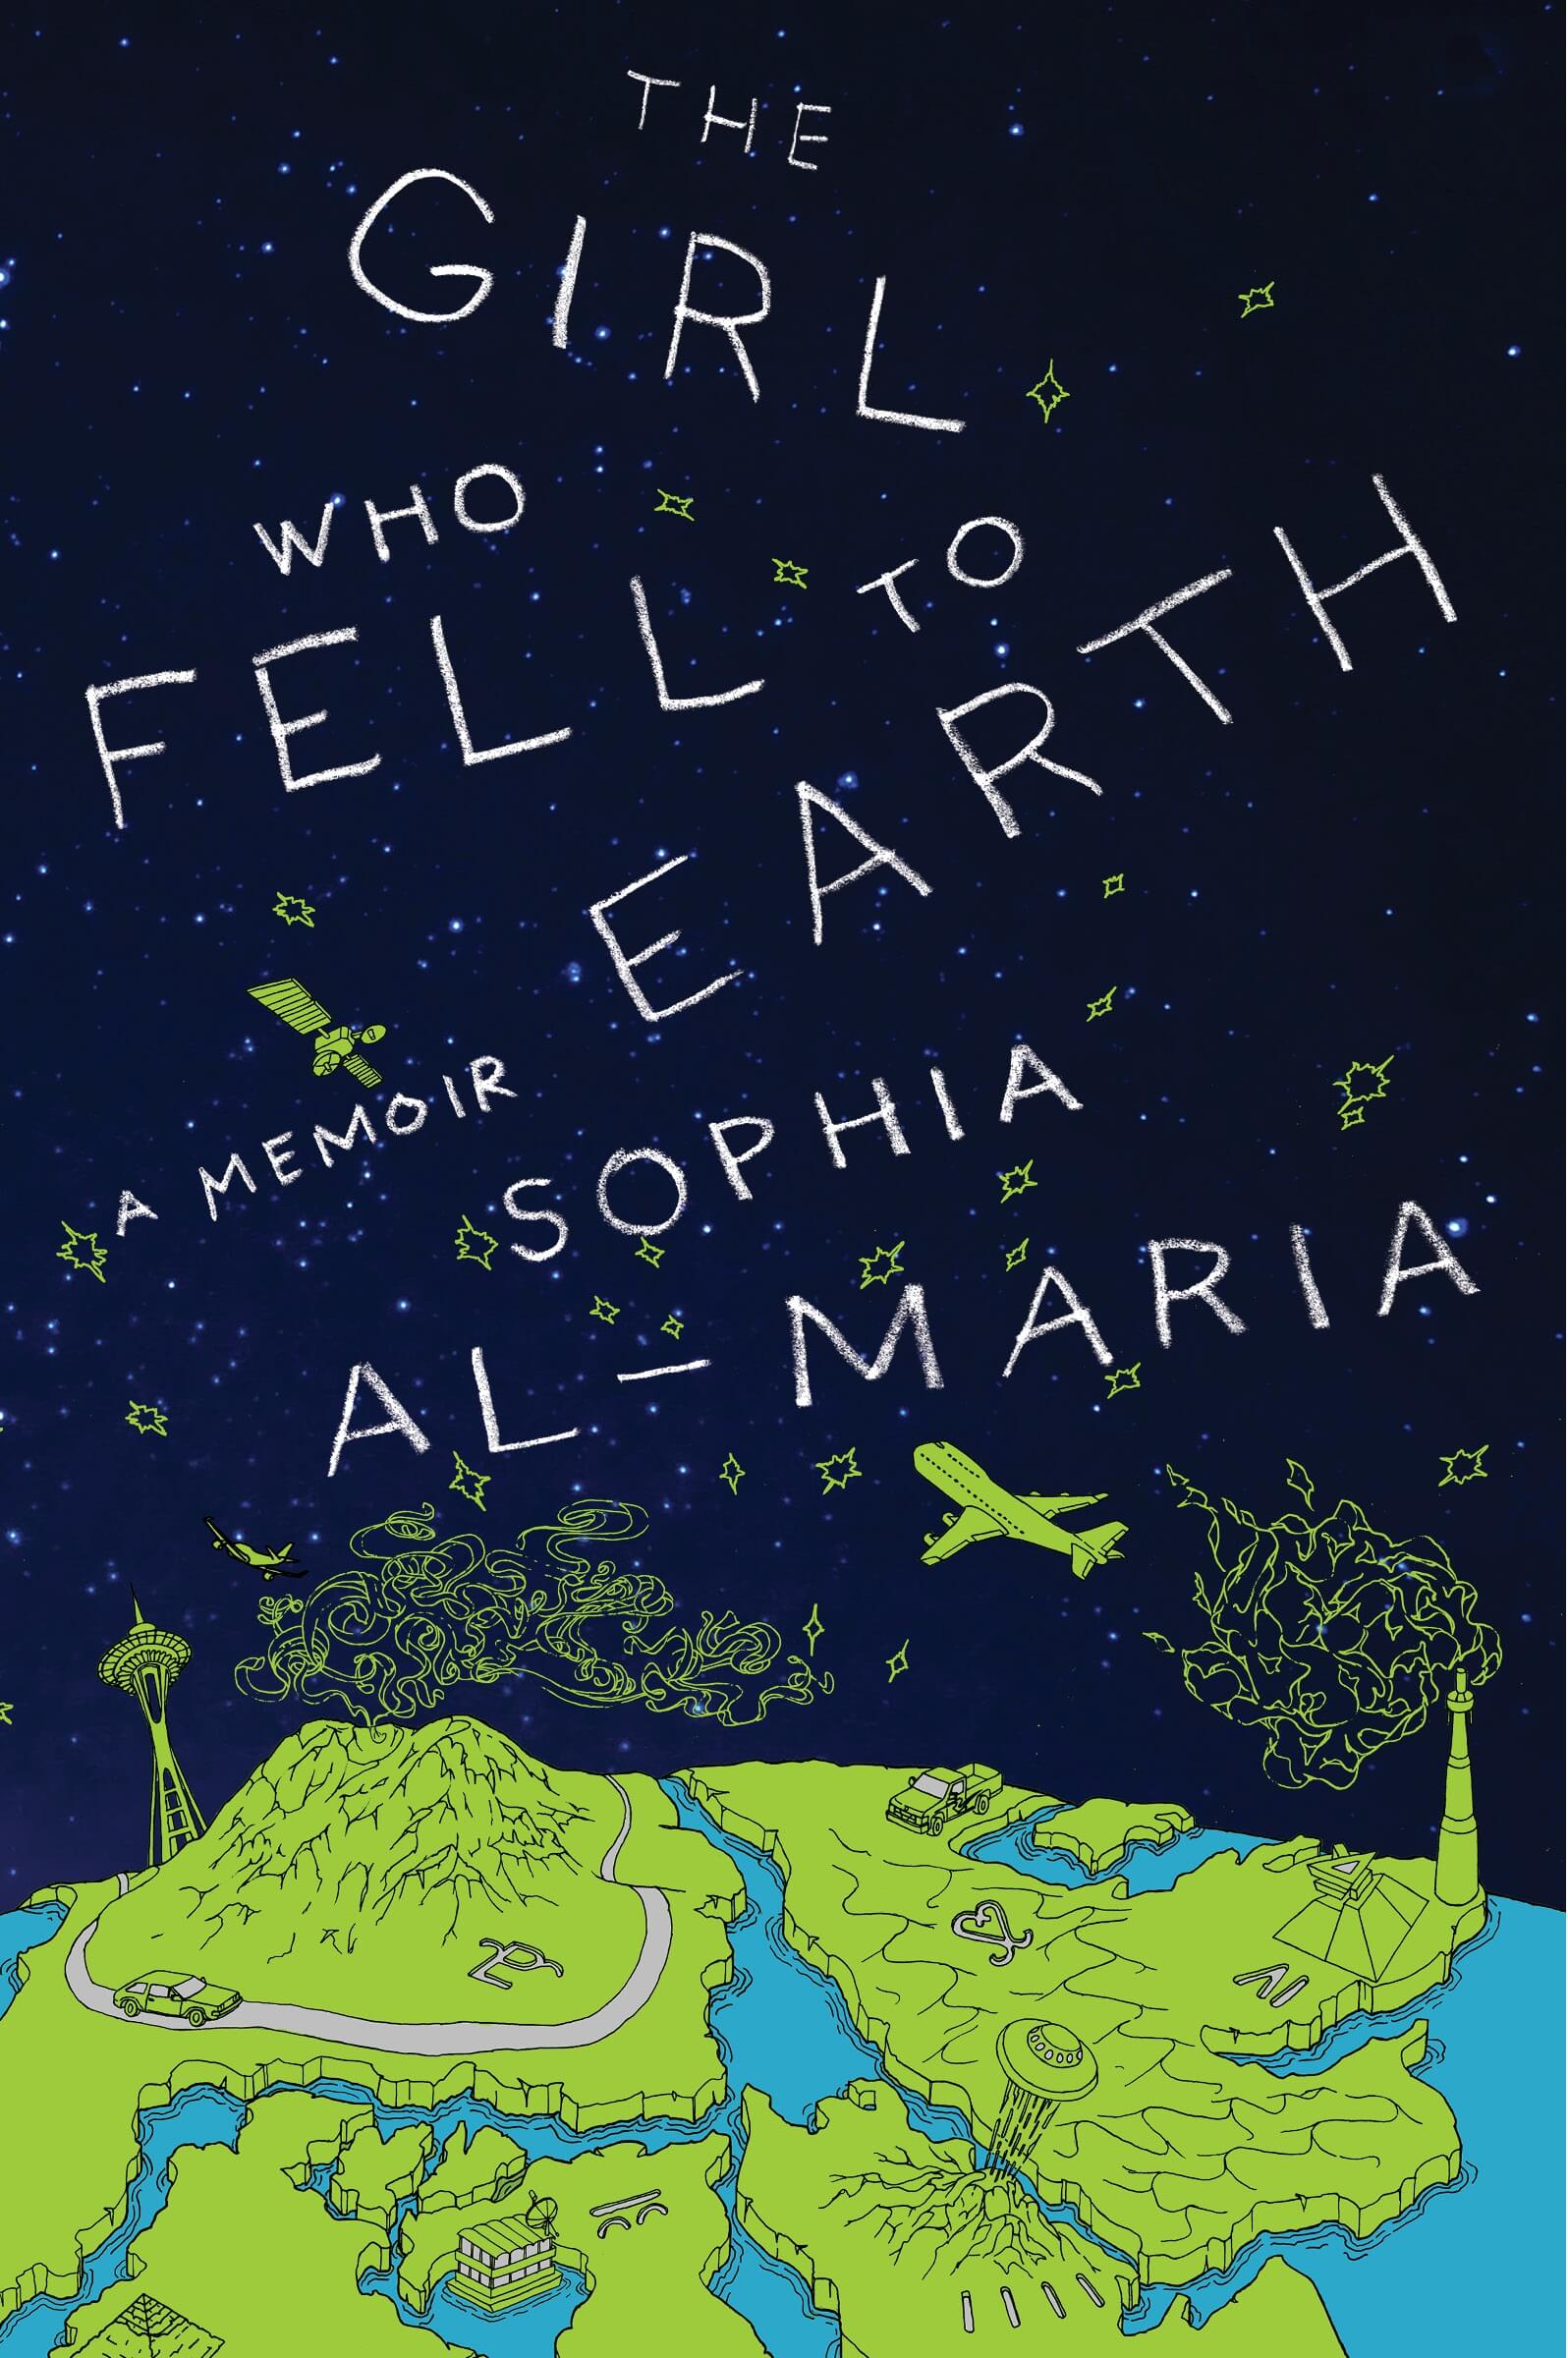 ‘The Girl Who Fell to Earth’ by Sophia Al-Maria